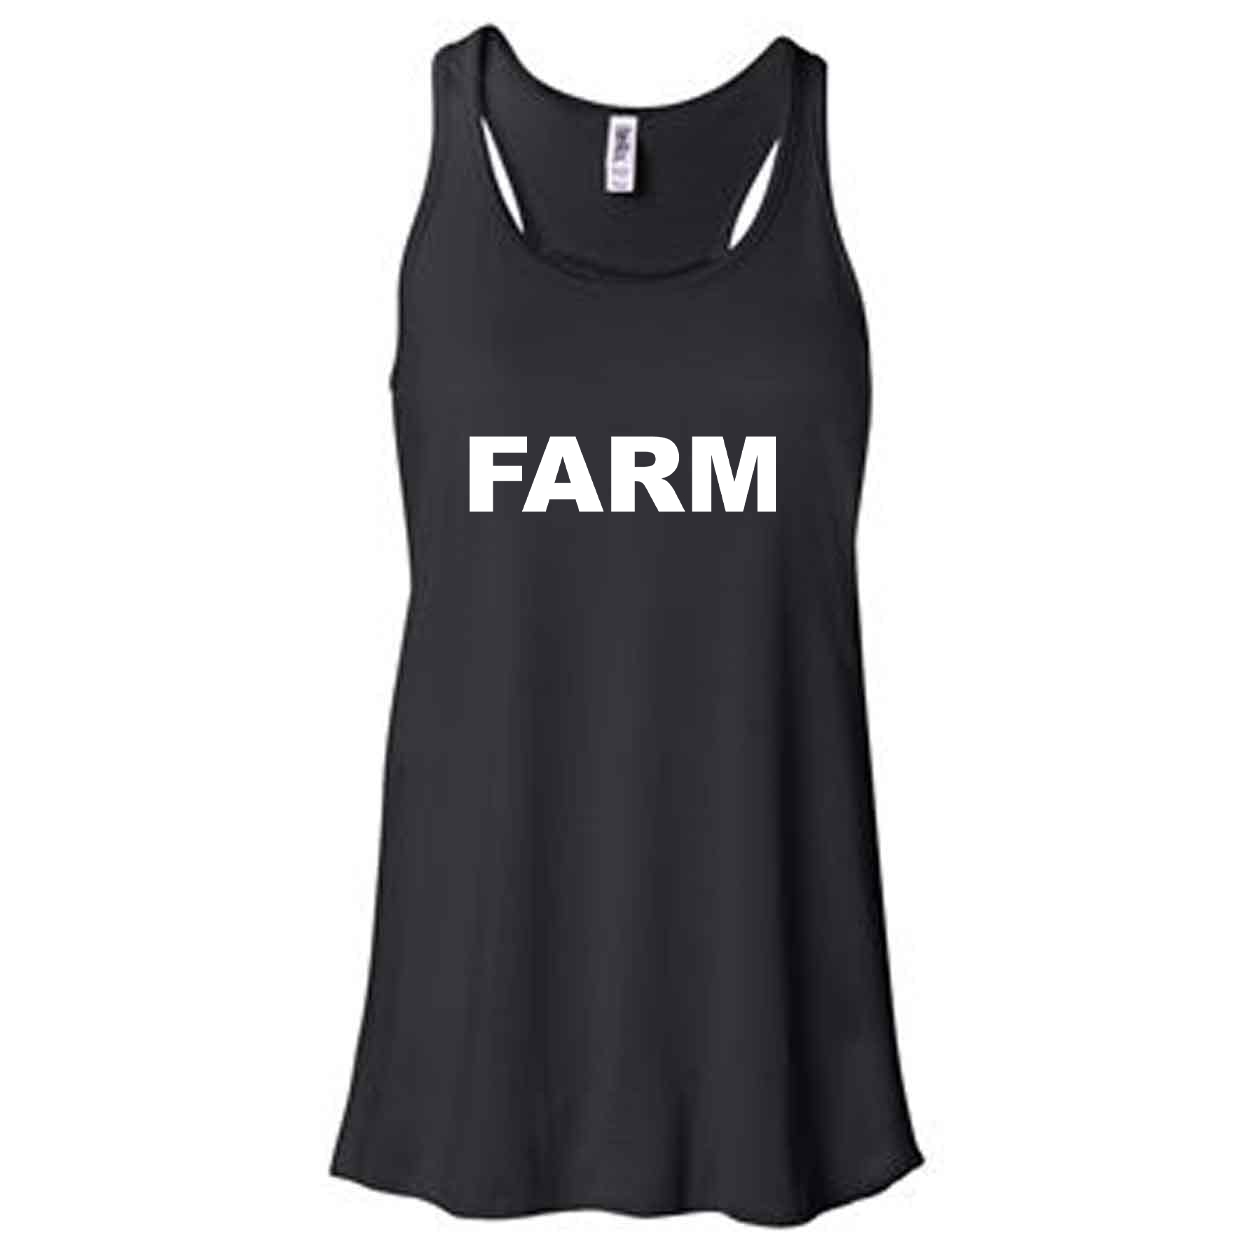 Farm Brand Logo Classic Women's Flowy Racerback Tank Top Black